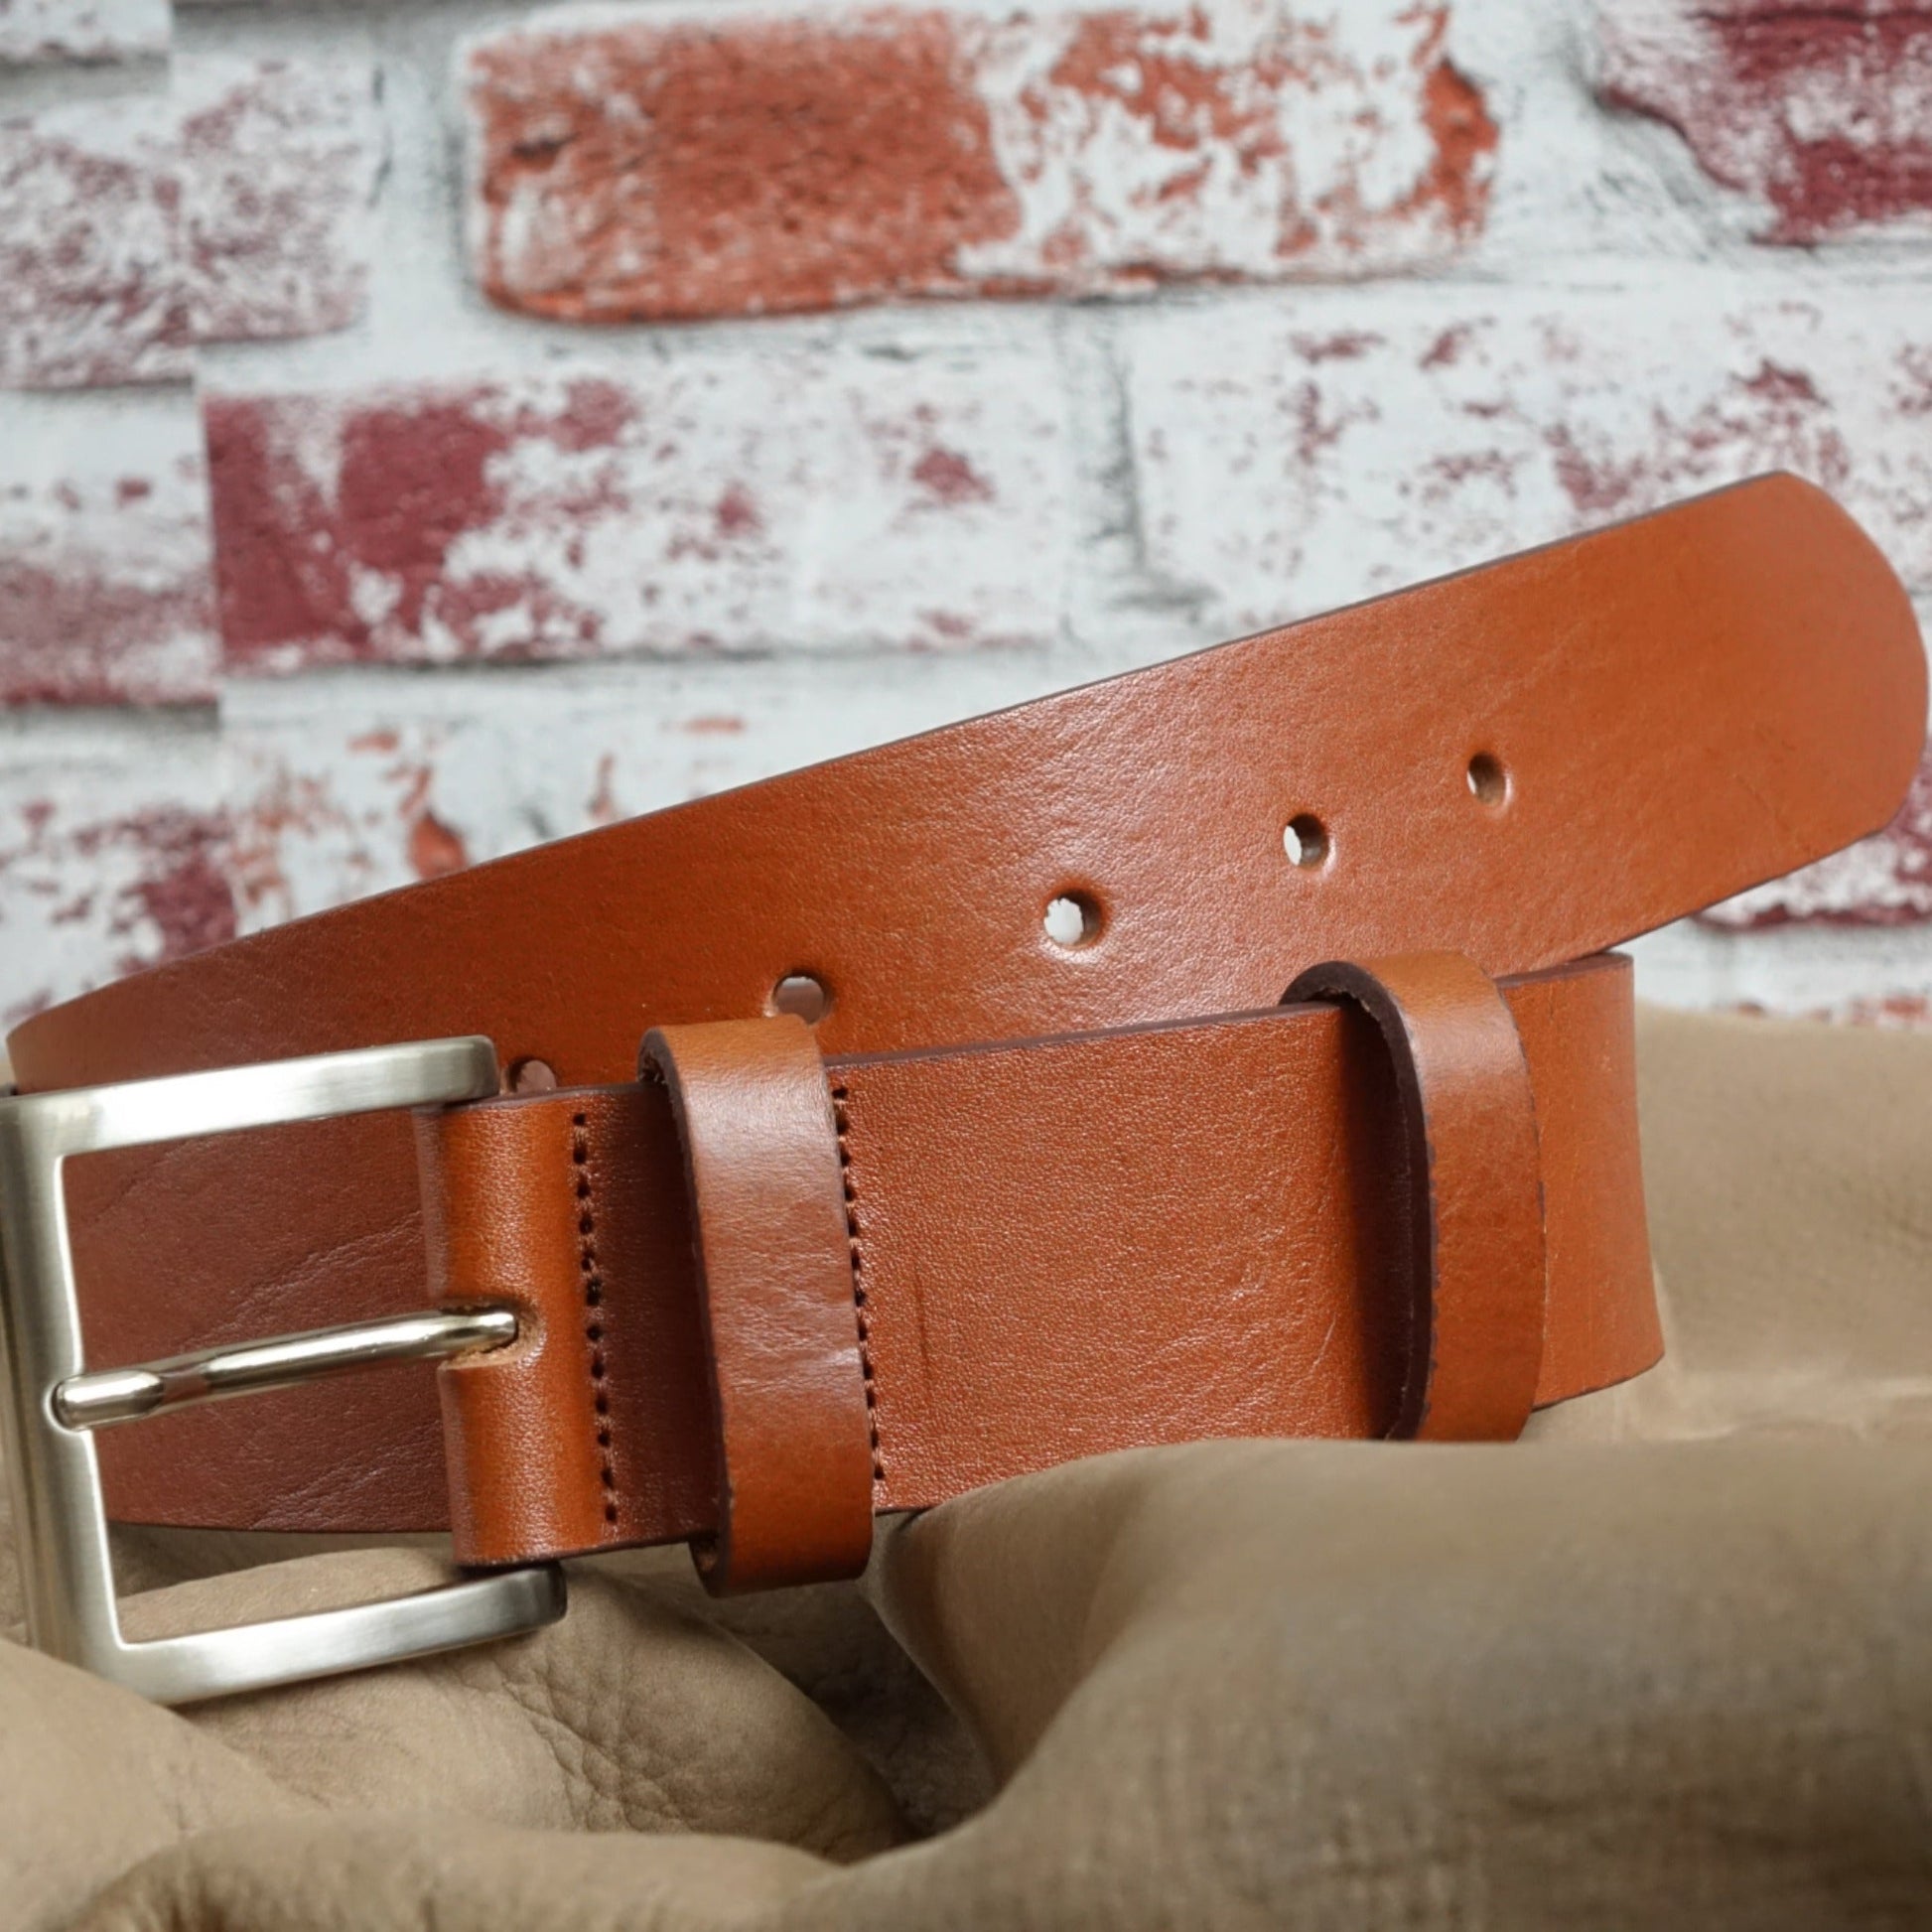 rgc handmade crafts leather belt cognac for men and women 6